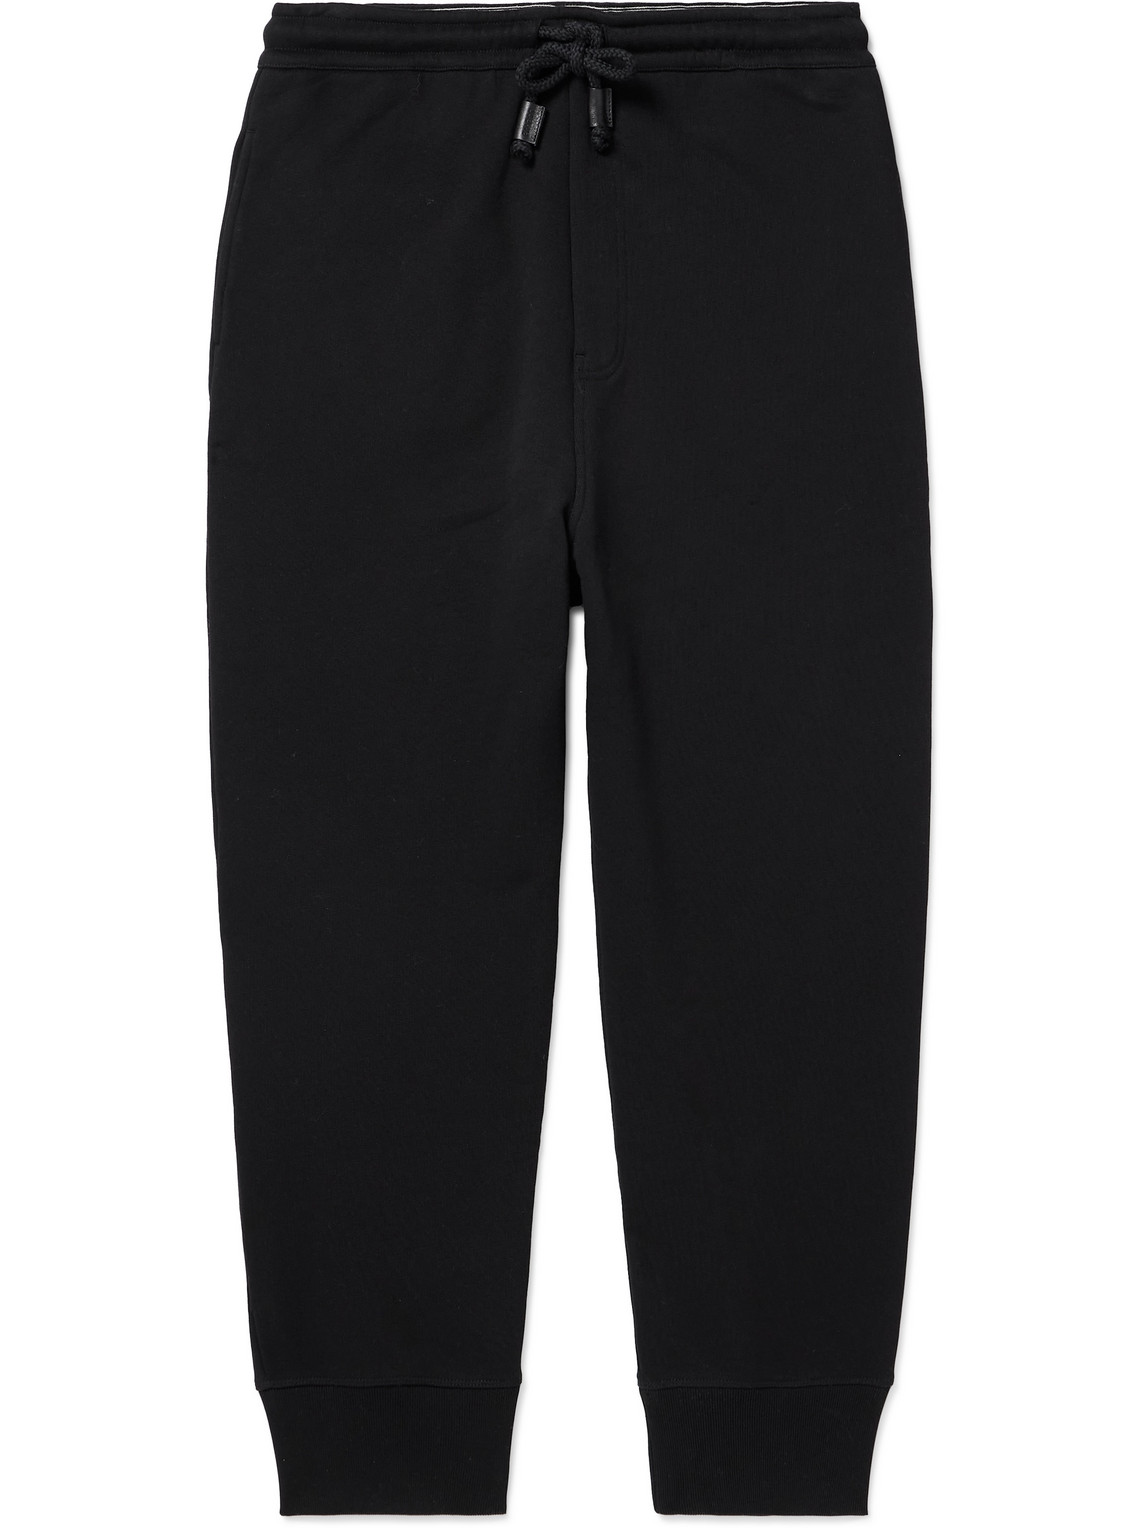 LOEWE - Tapered Cotton-Jersey Sweatpants - Men - Black - S von LOEWE